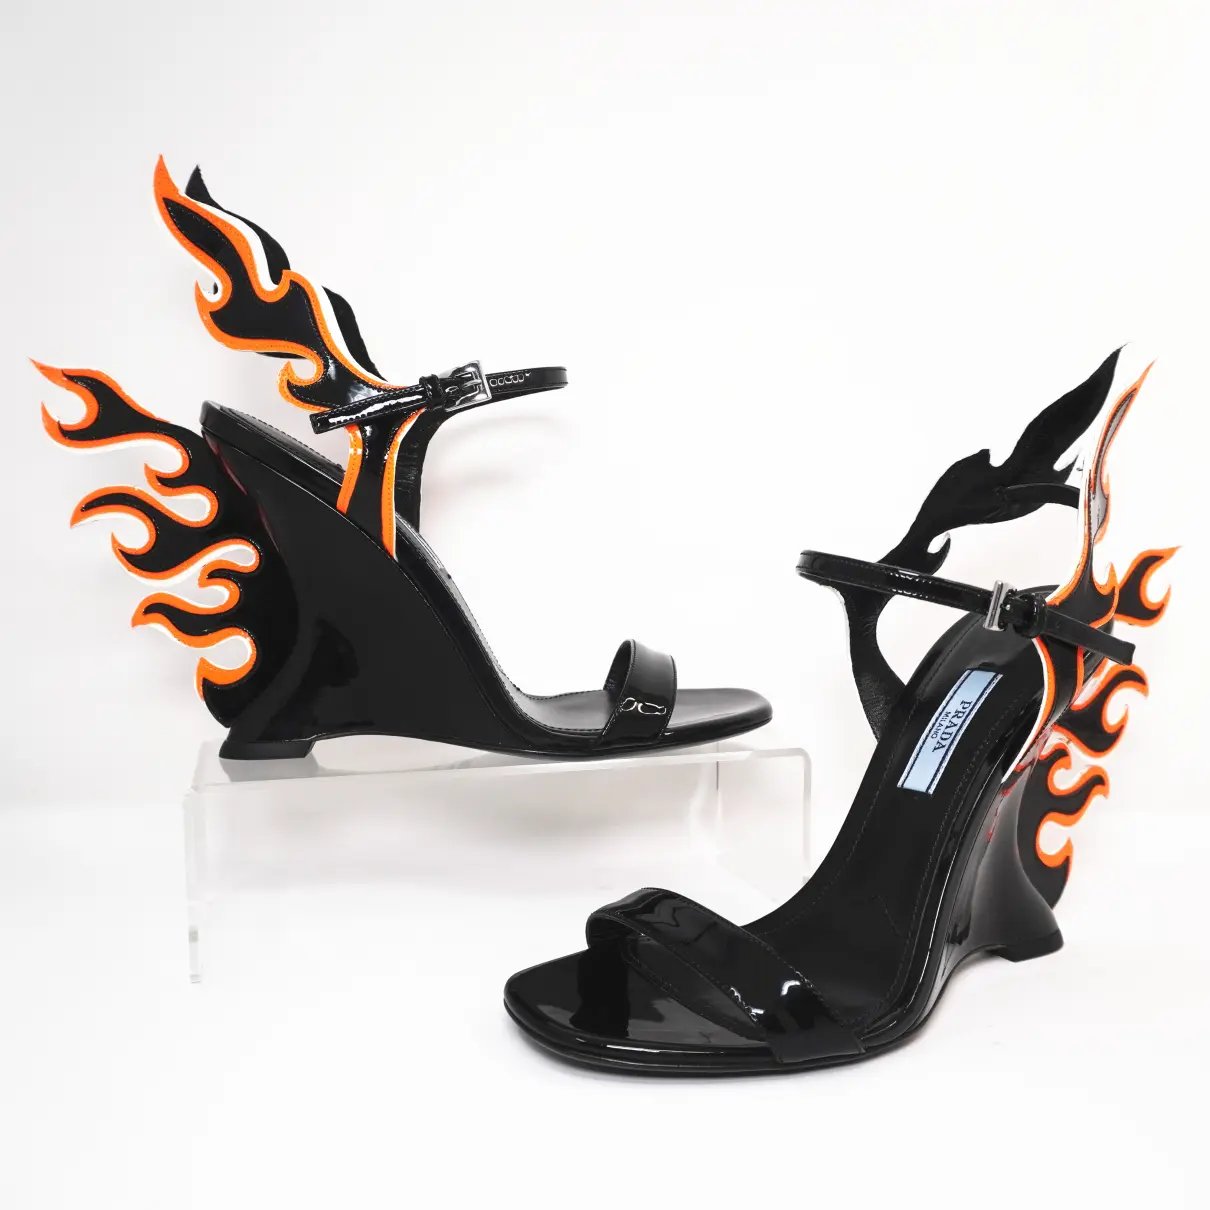 Flame patent leather sandal Prada